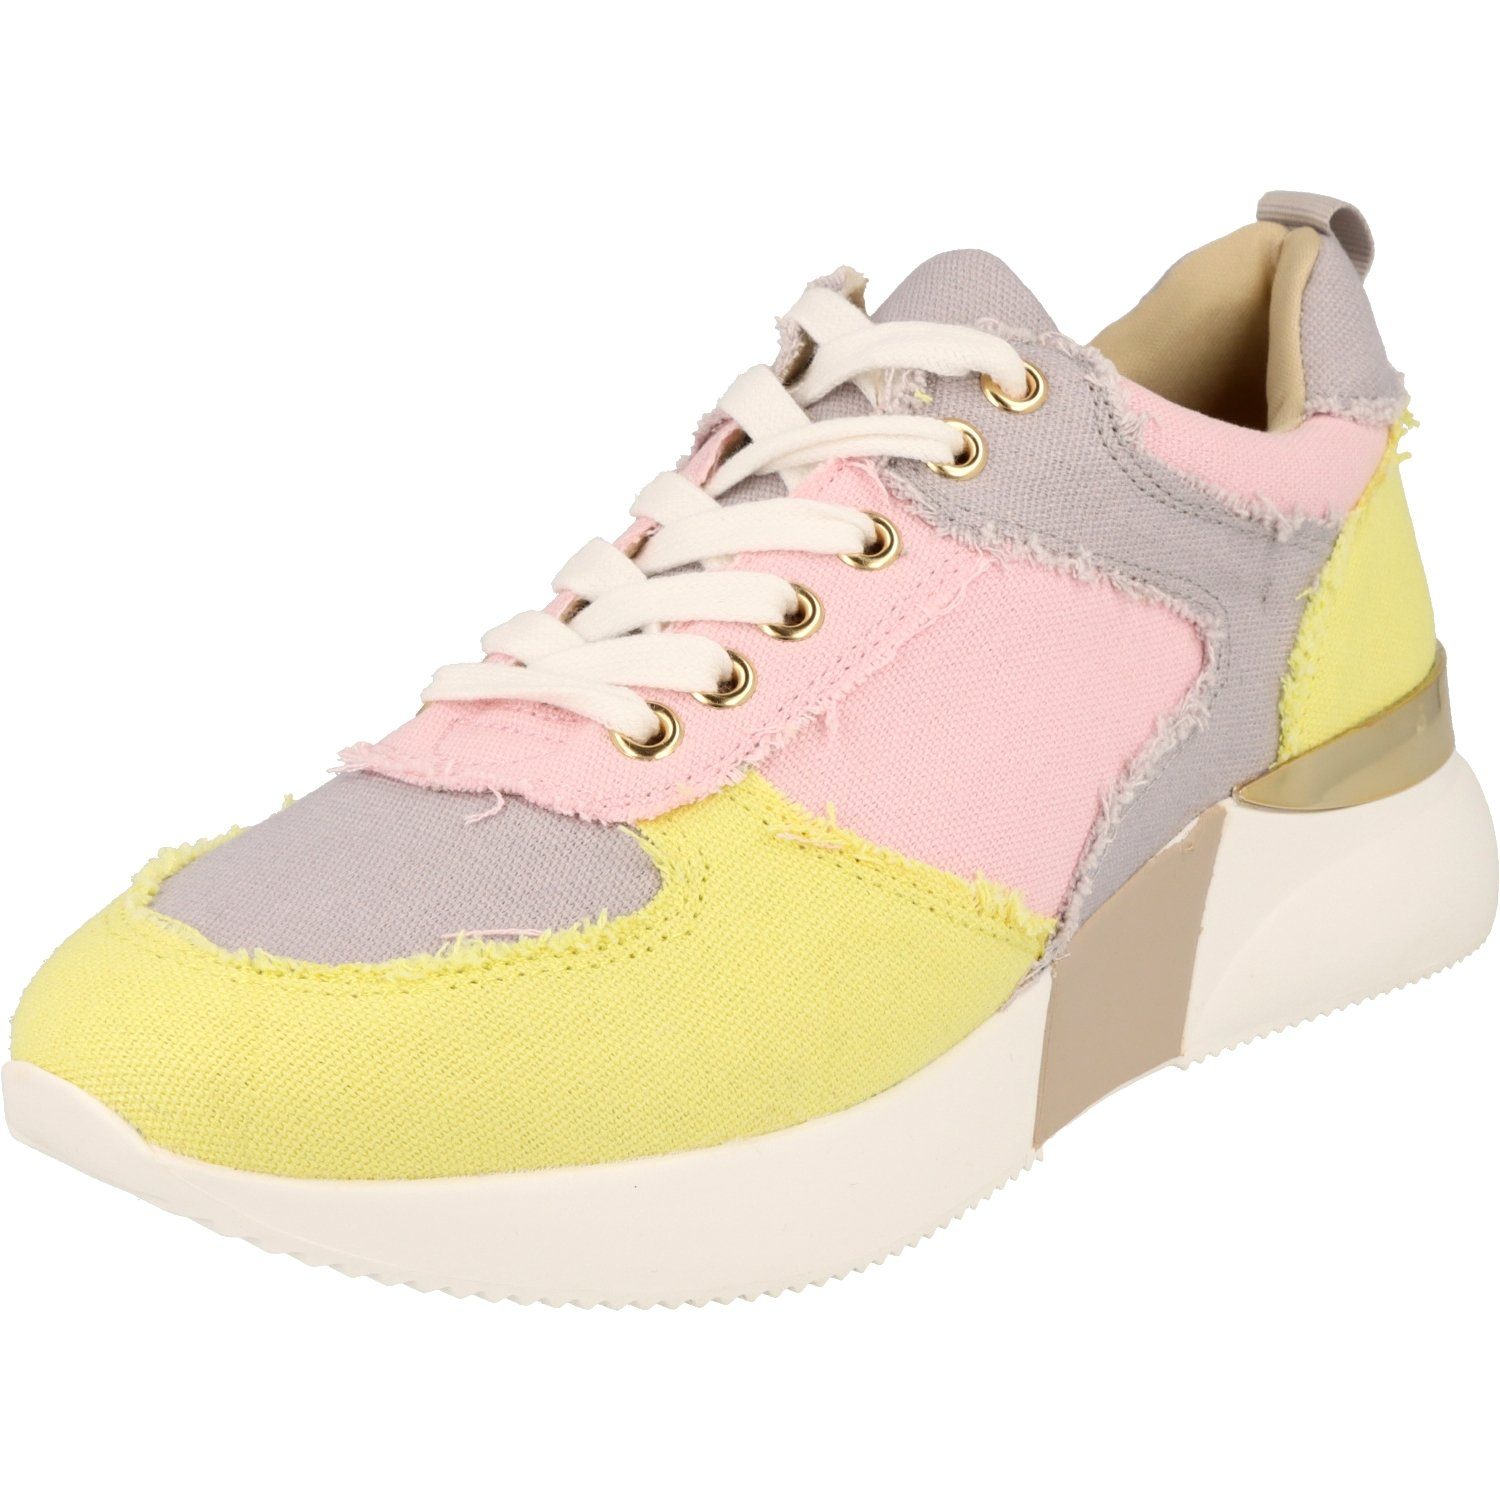 La Strada Damen Schuhe Canvas Sneaker Halbschuhe Schnürer 2001068-4226 Sneaker Yellow/Grey